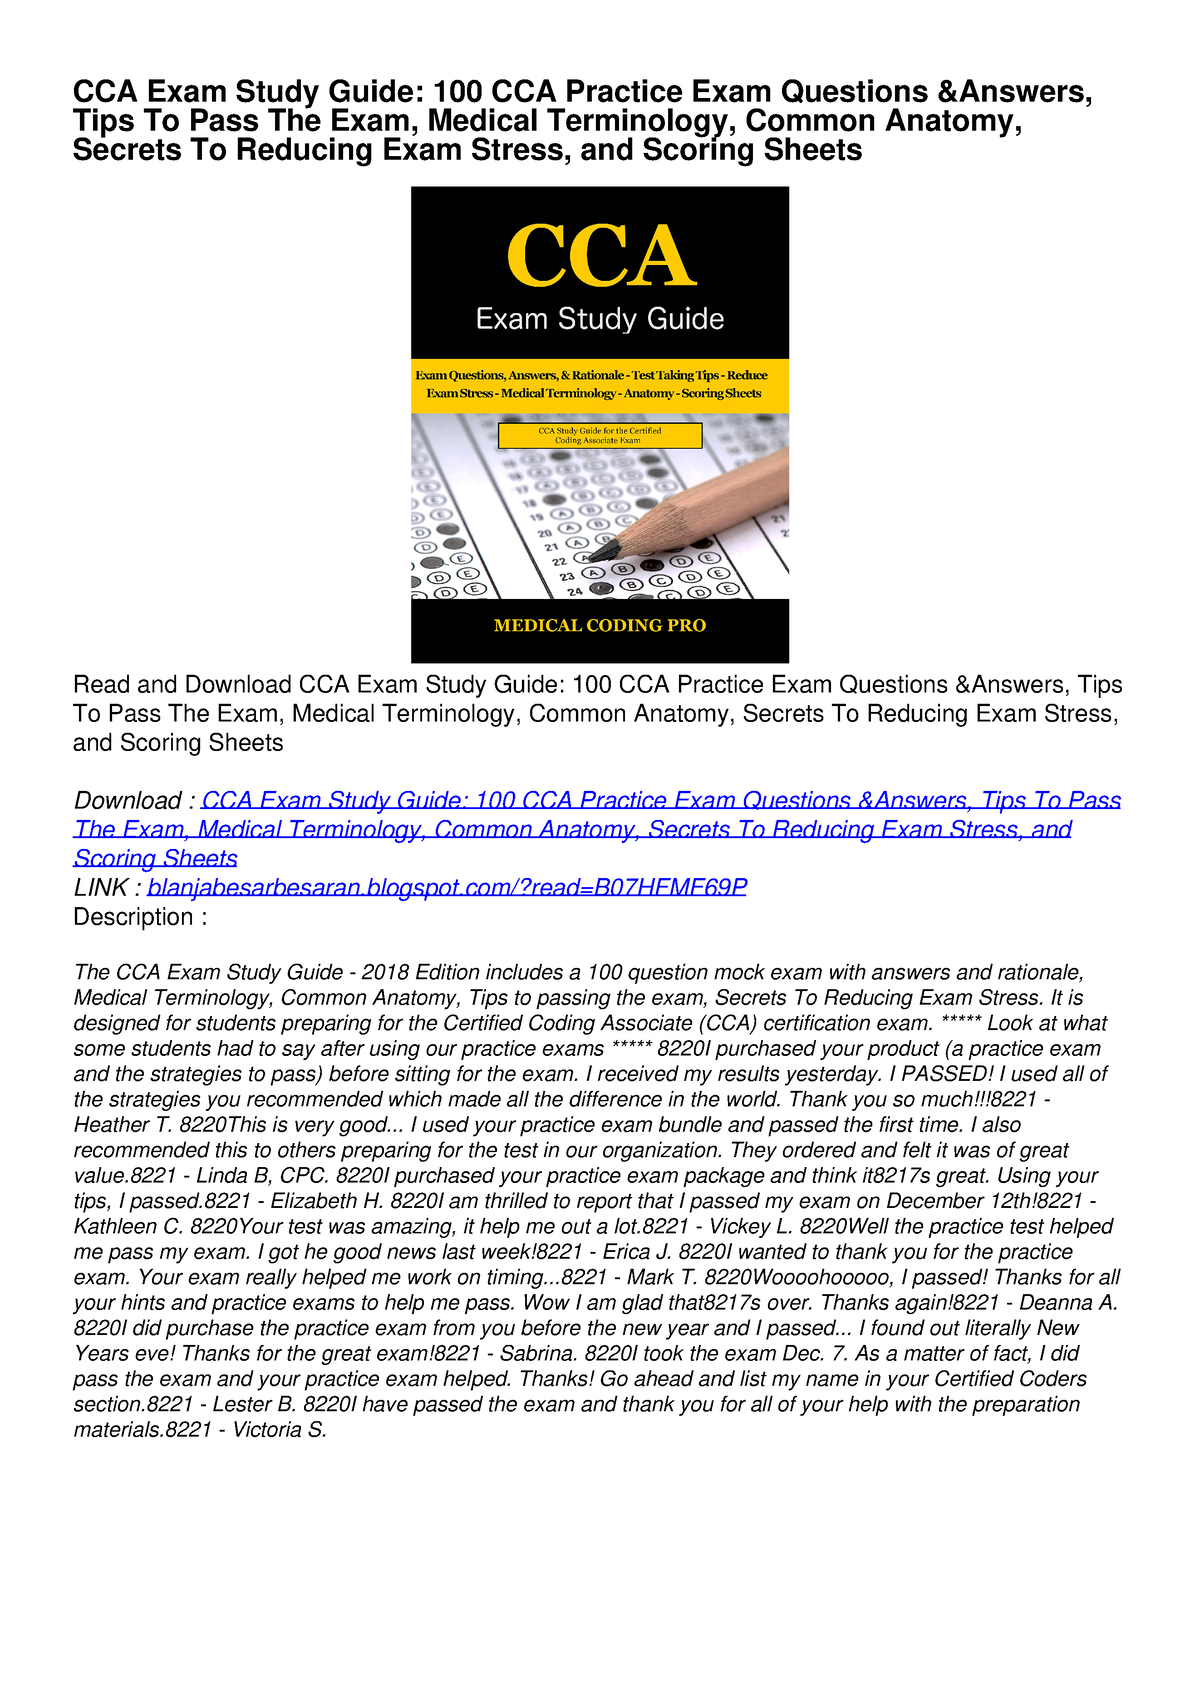 EPUB DOWNLOADCCA Exam Study Guide 100 CCA Practice Exam Questions